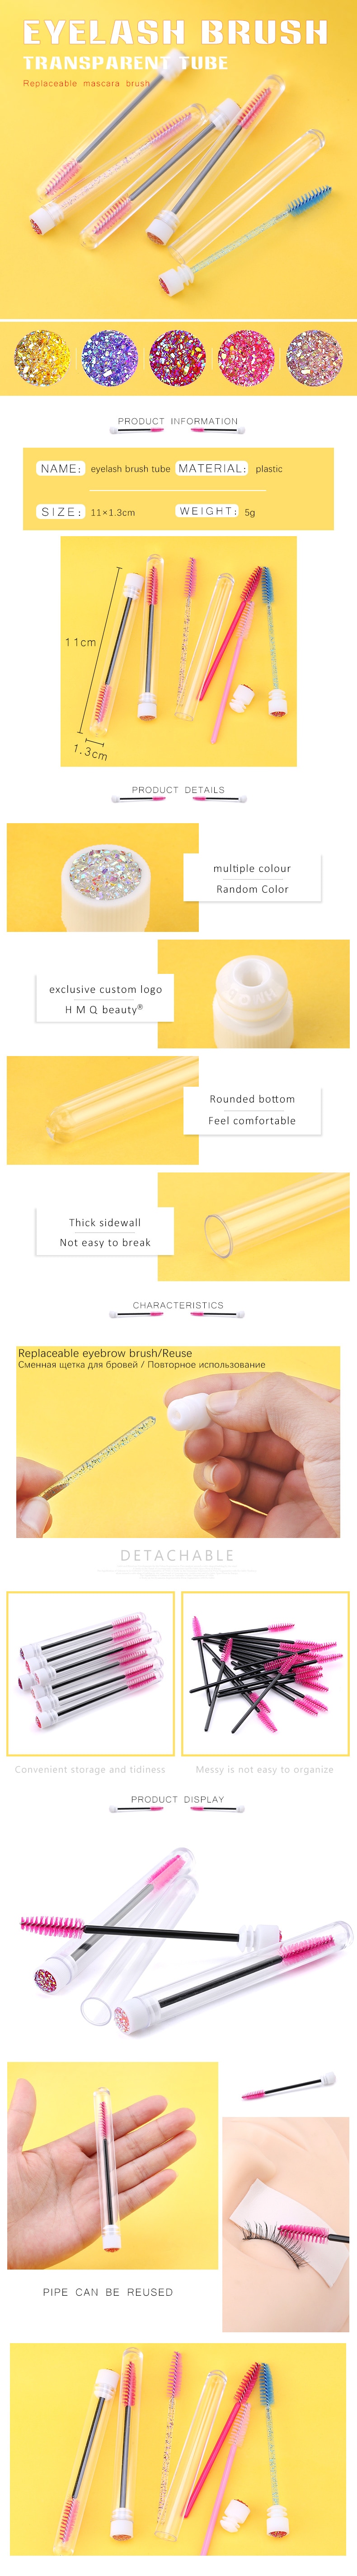 NEW Eyelash Extender Disposable Eyebrow Brush Separate Tube Design Charming Diamond Bottom Mascara Stick Applicator